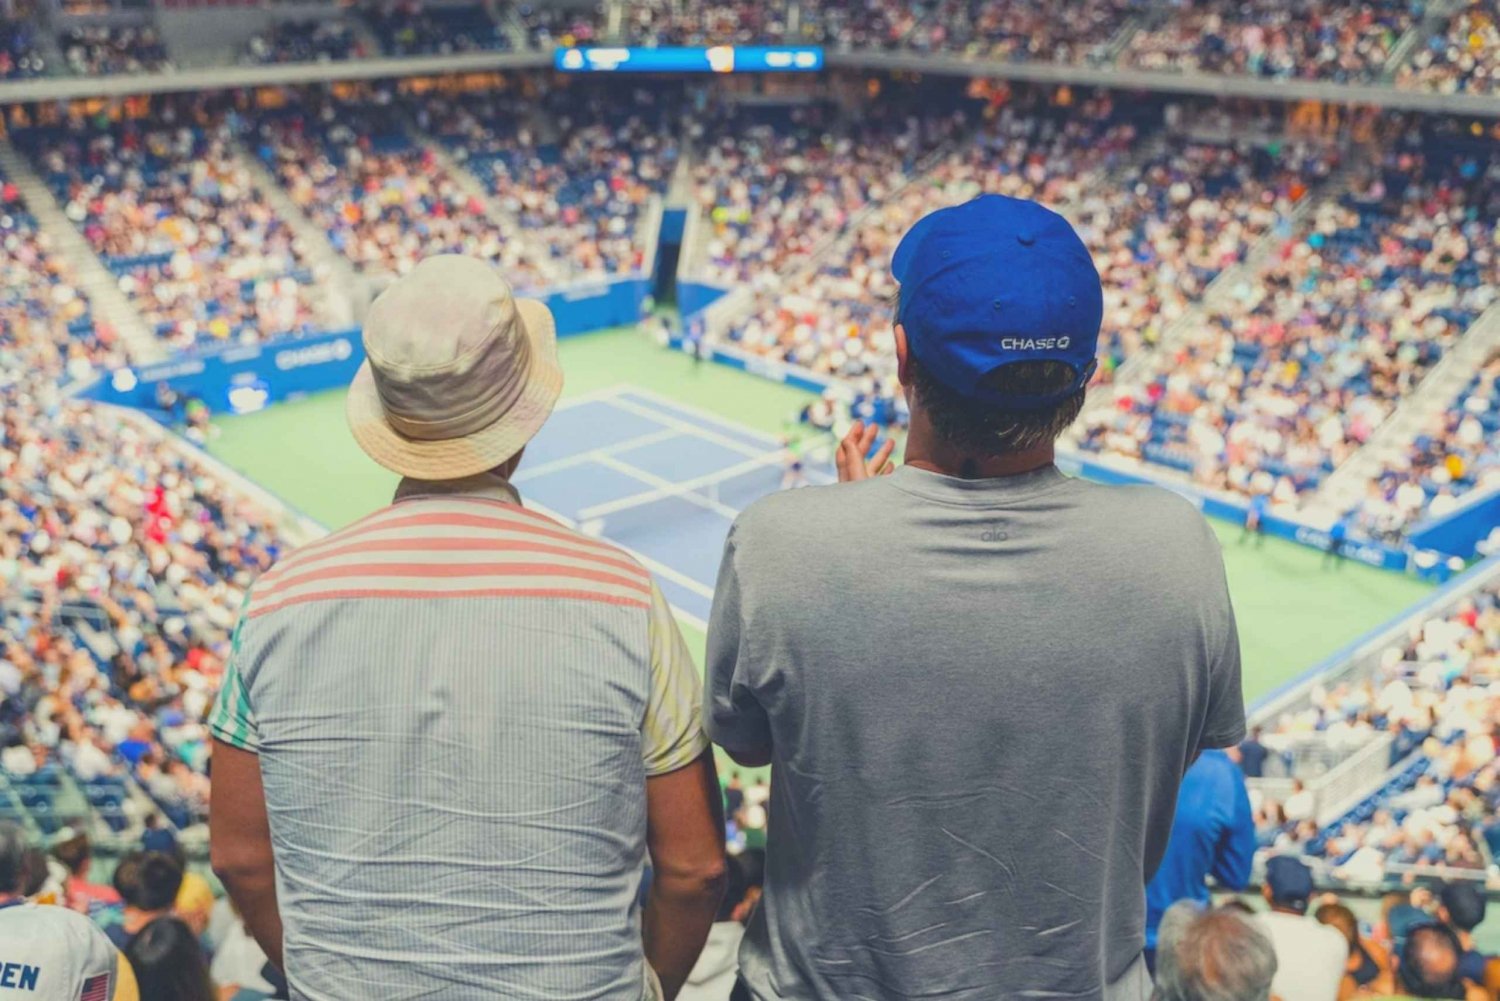 NYC: Campionato di tennis US Open allo stadio Louis Armstrong